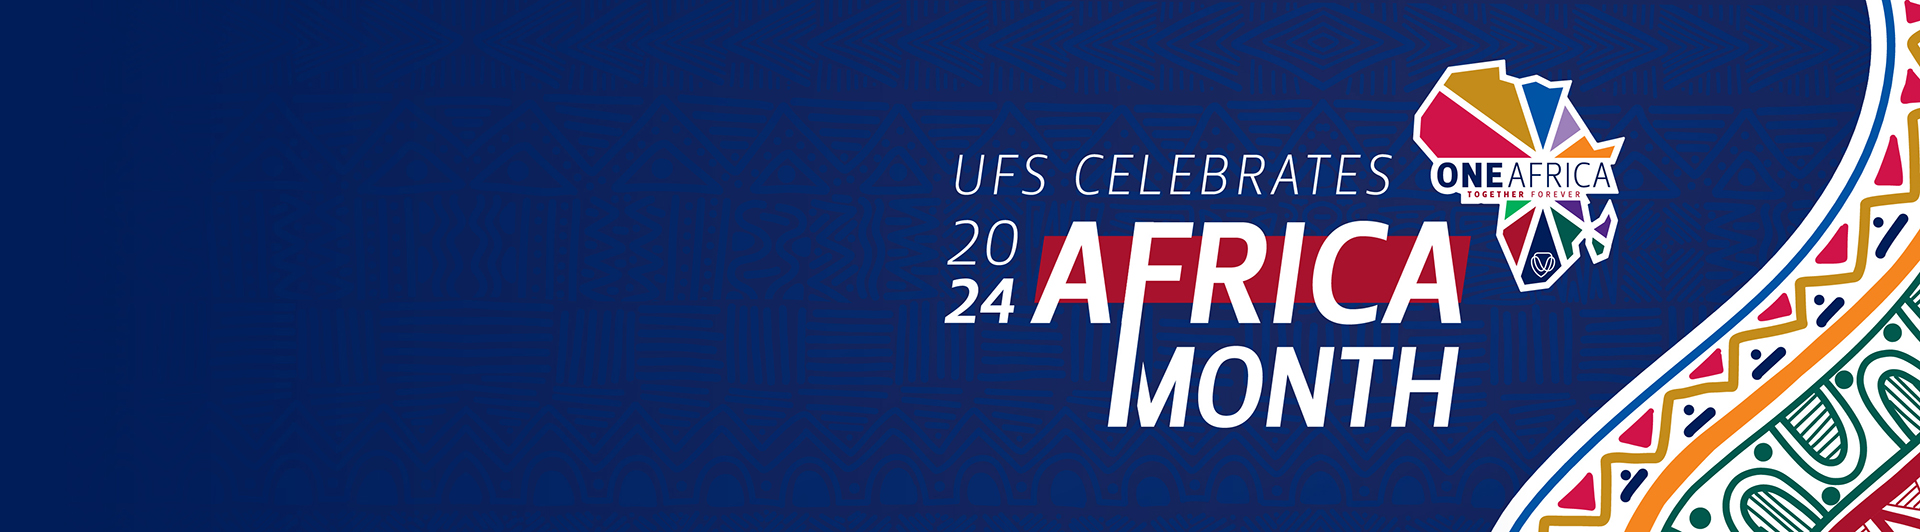 UFS - Celebrating Africa Month